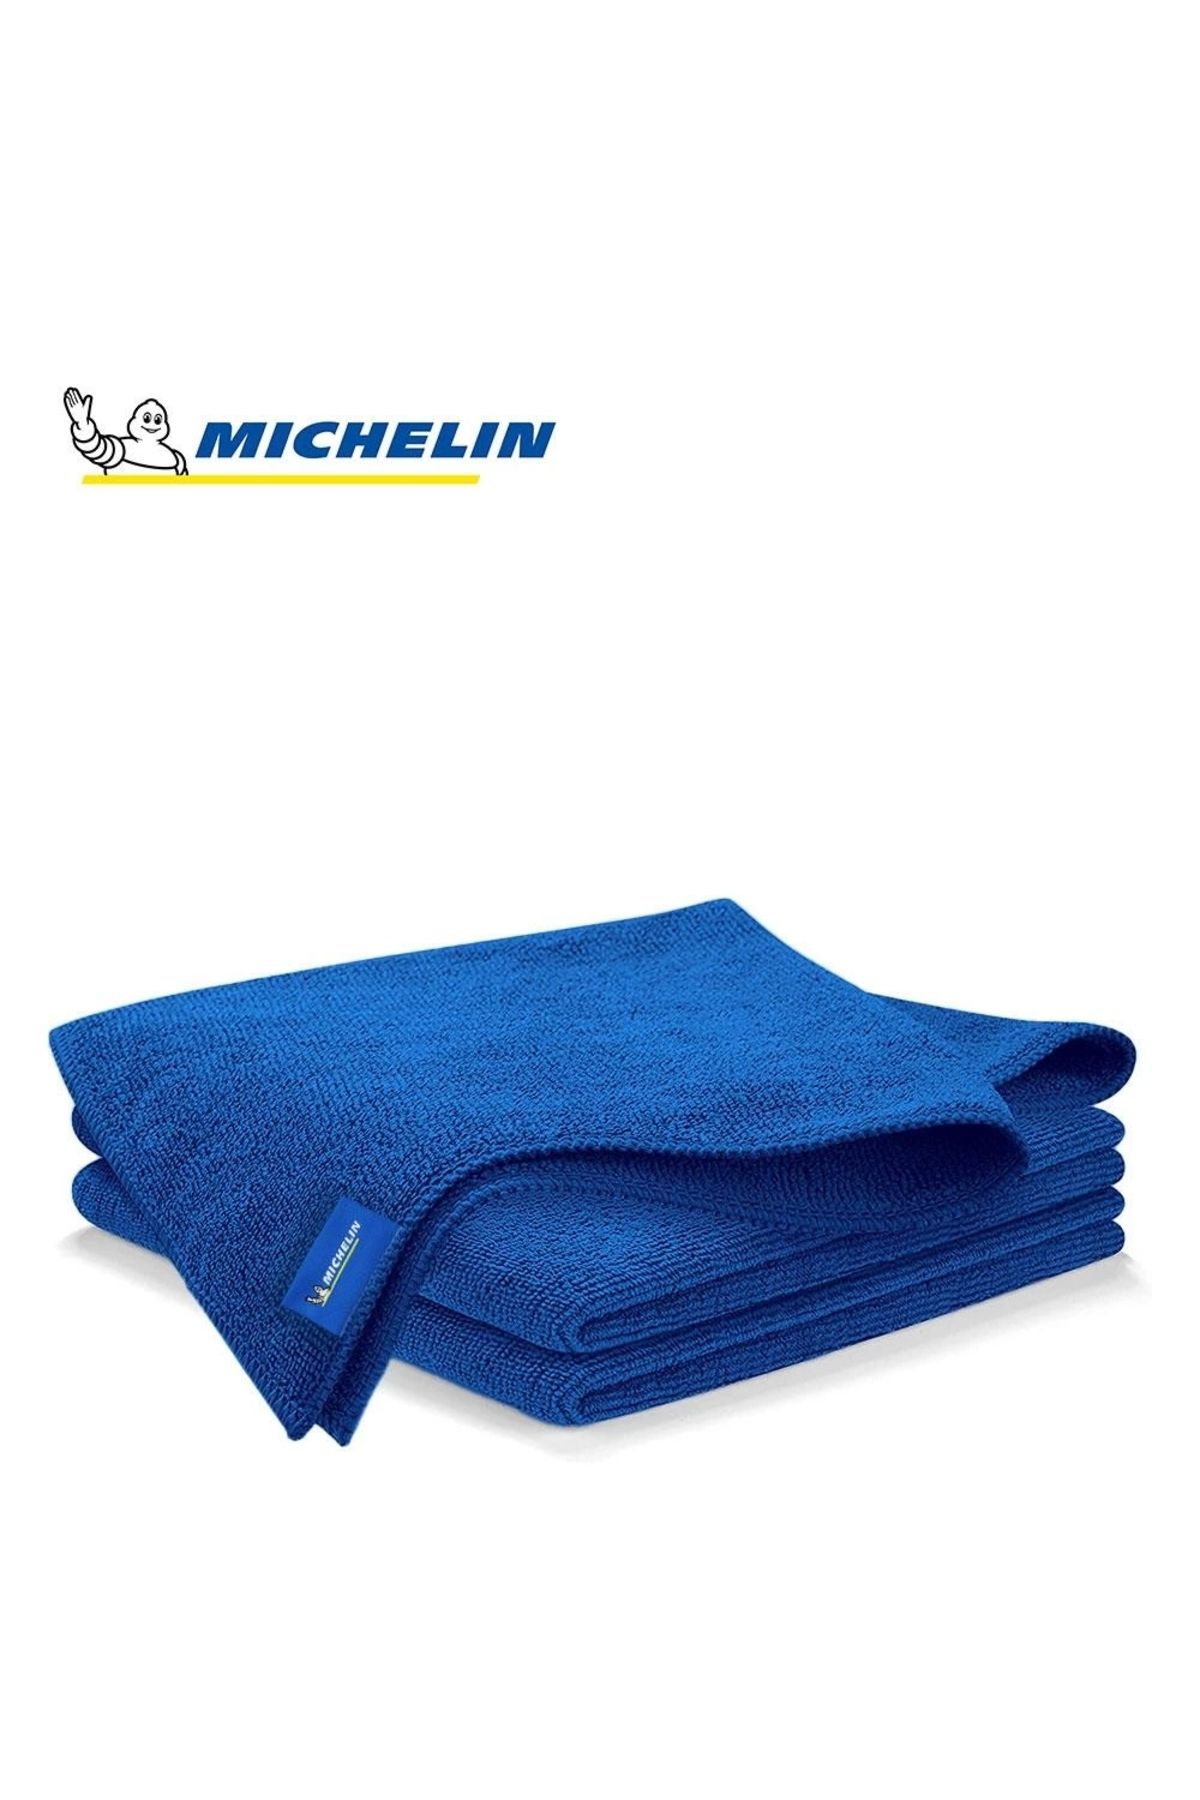 Michelin Mc42101 40x30cm Süper Emici Mikrofiber Havlu, 3 Adet